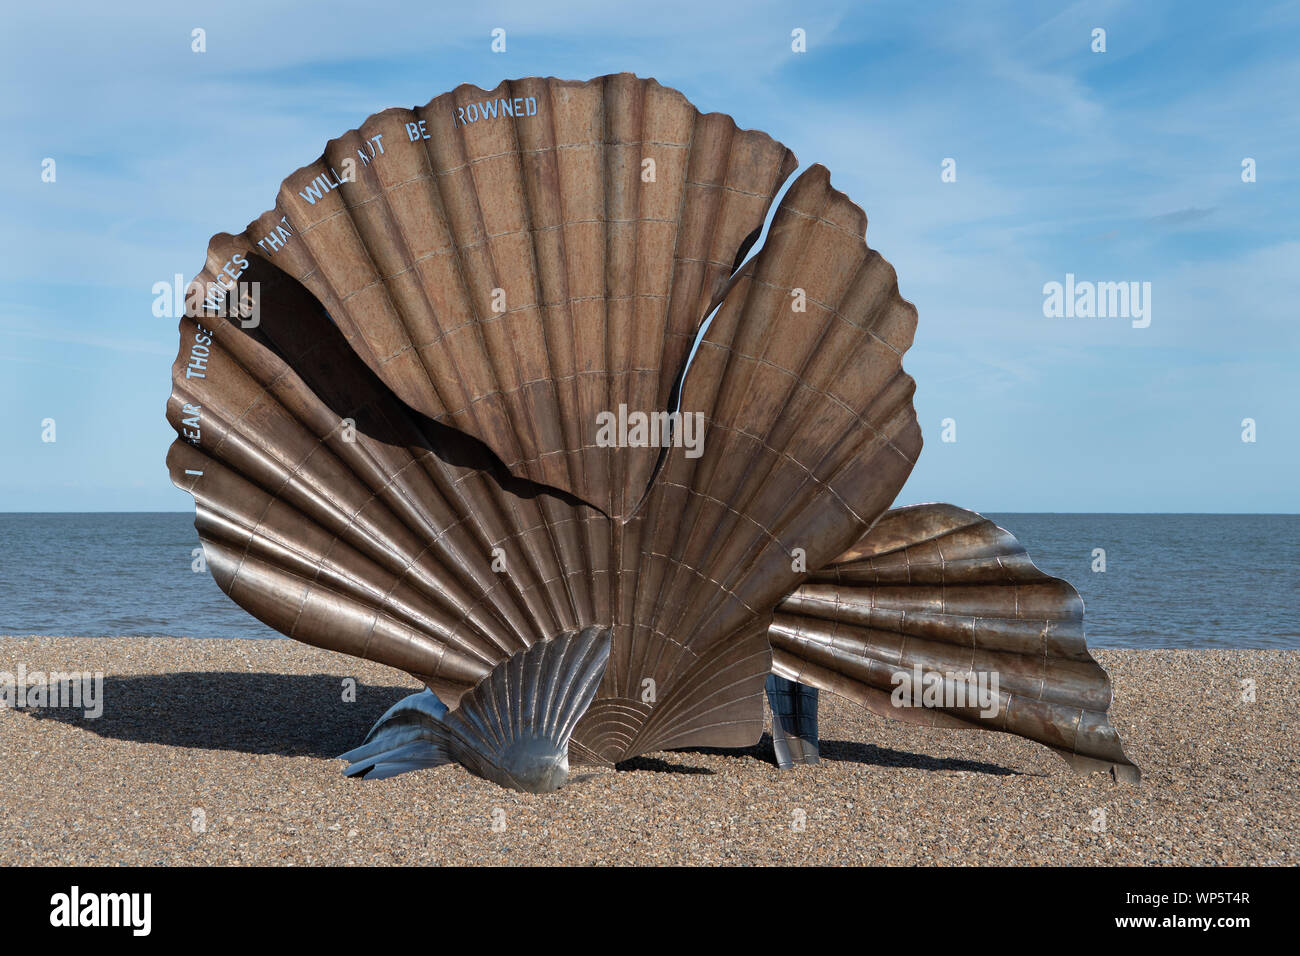 Scallop shell sculpture at Aldeburgh beach, Suffolk Stock Photo